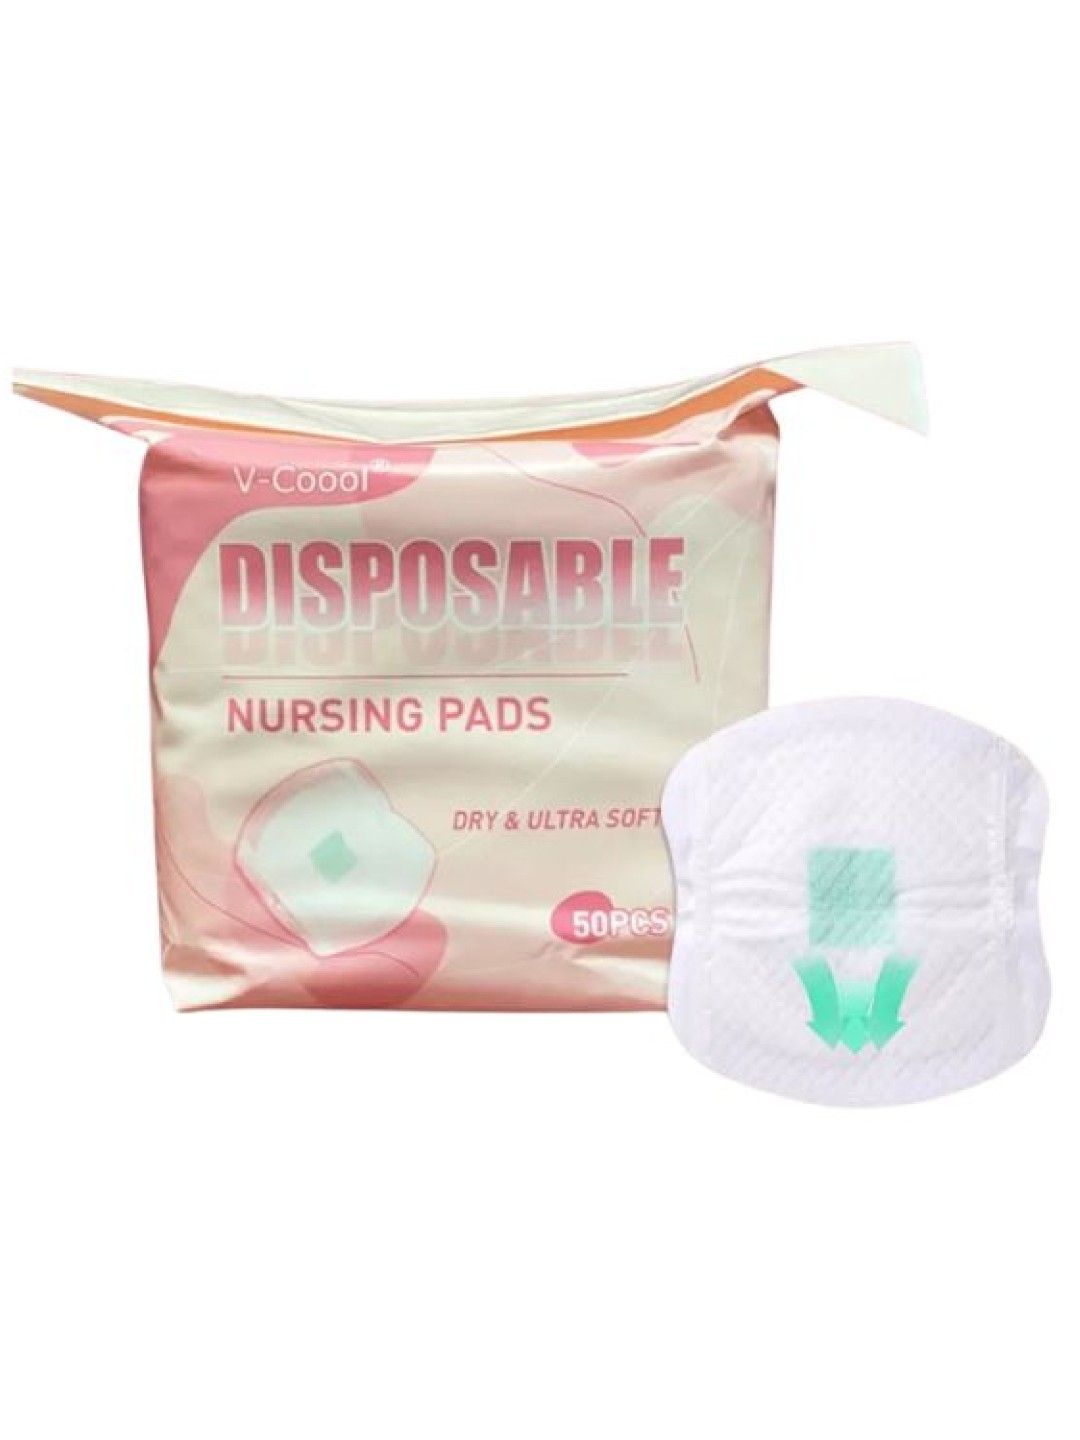 V-coool Disposable Nursing Breast Pads 50s